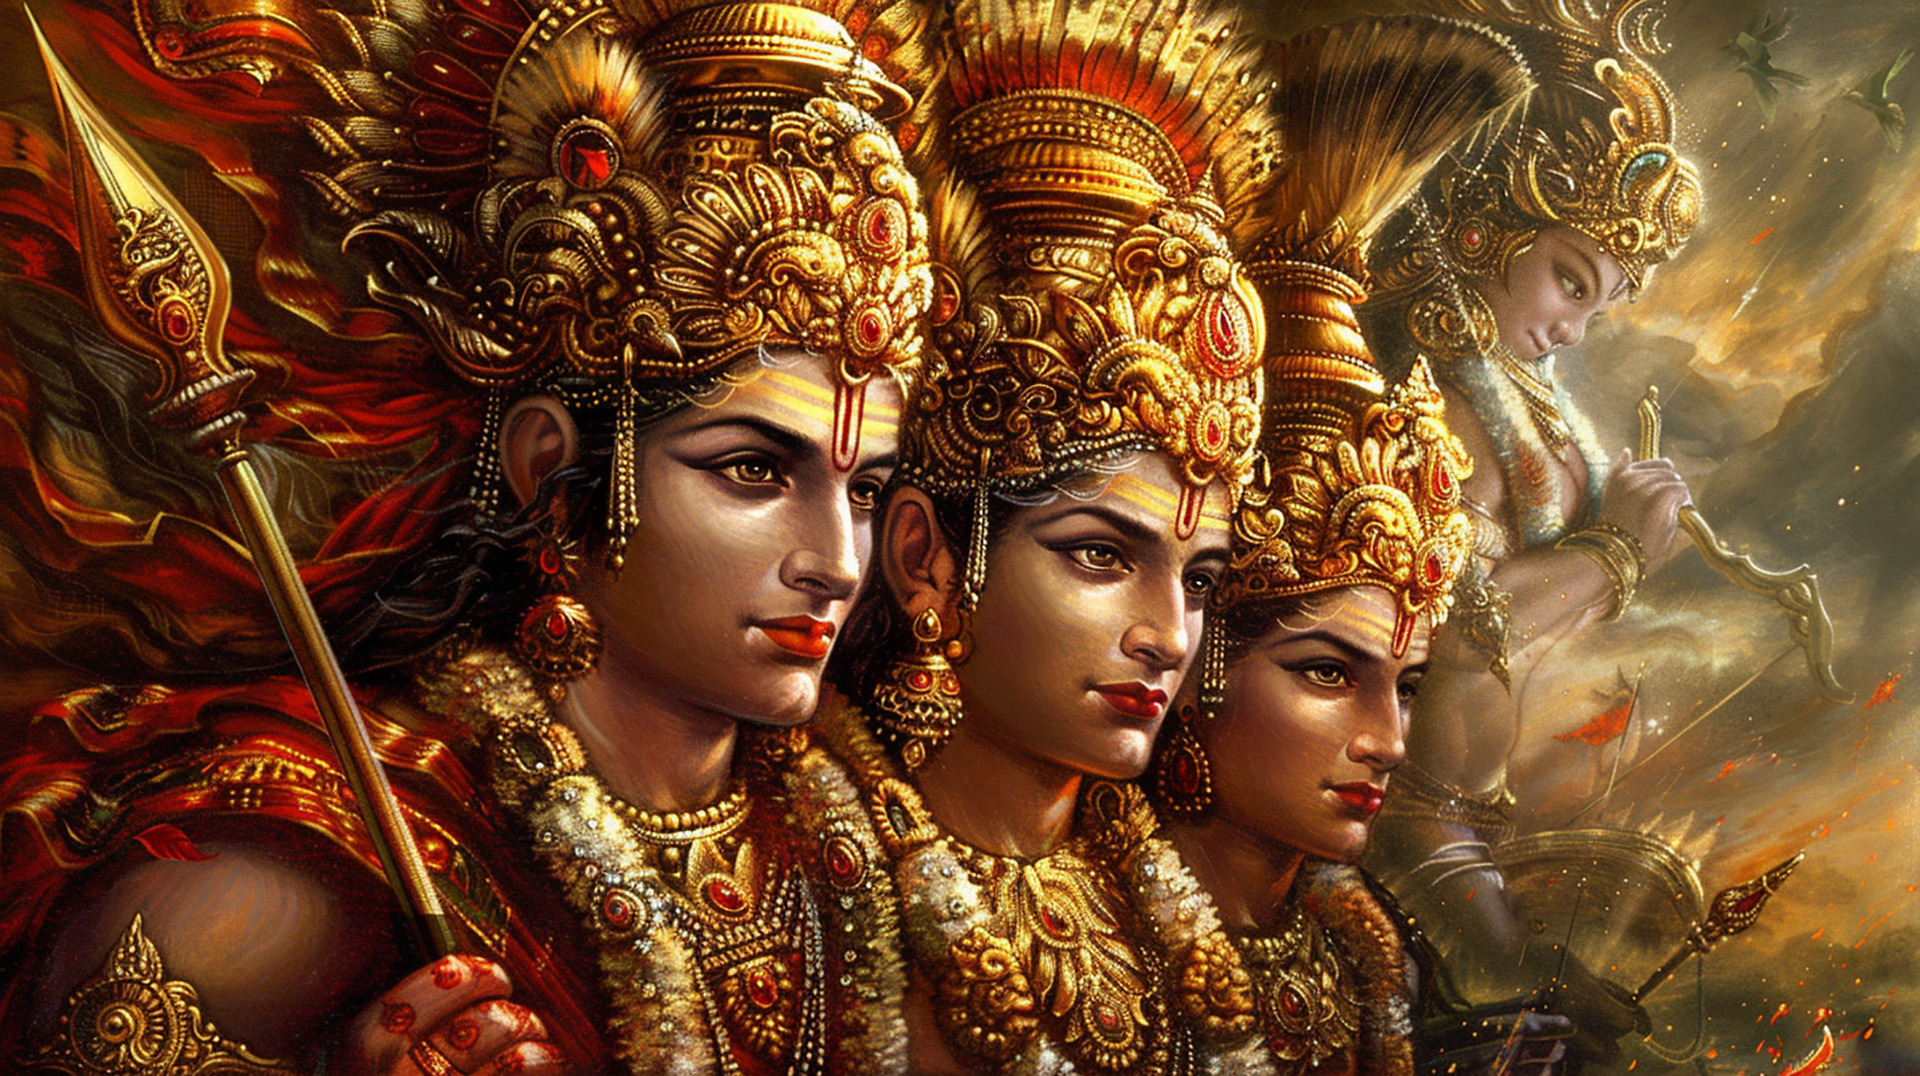 Divine Krishna: AI Image of Lord Krishna